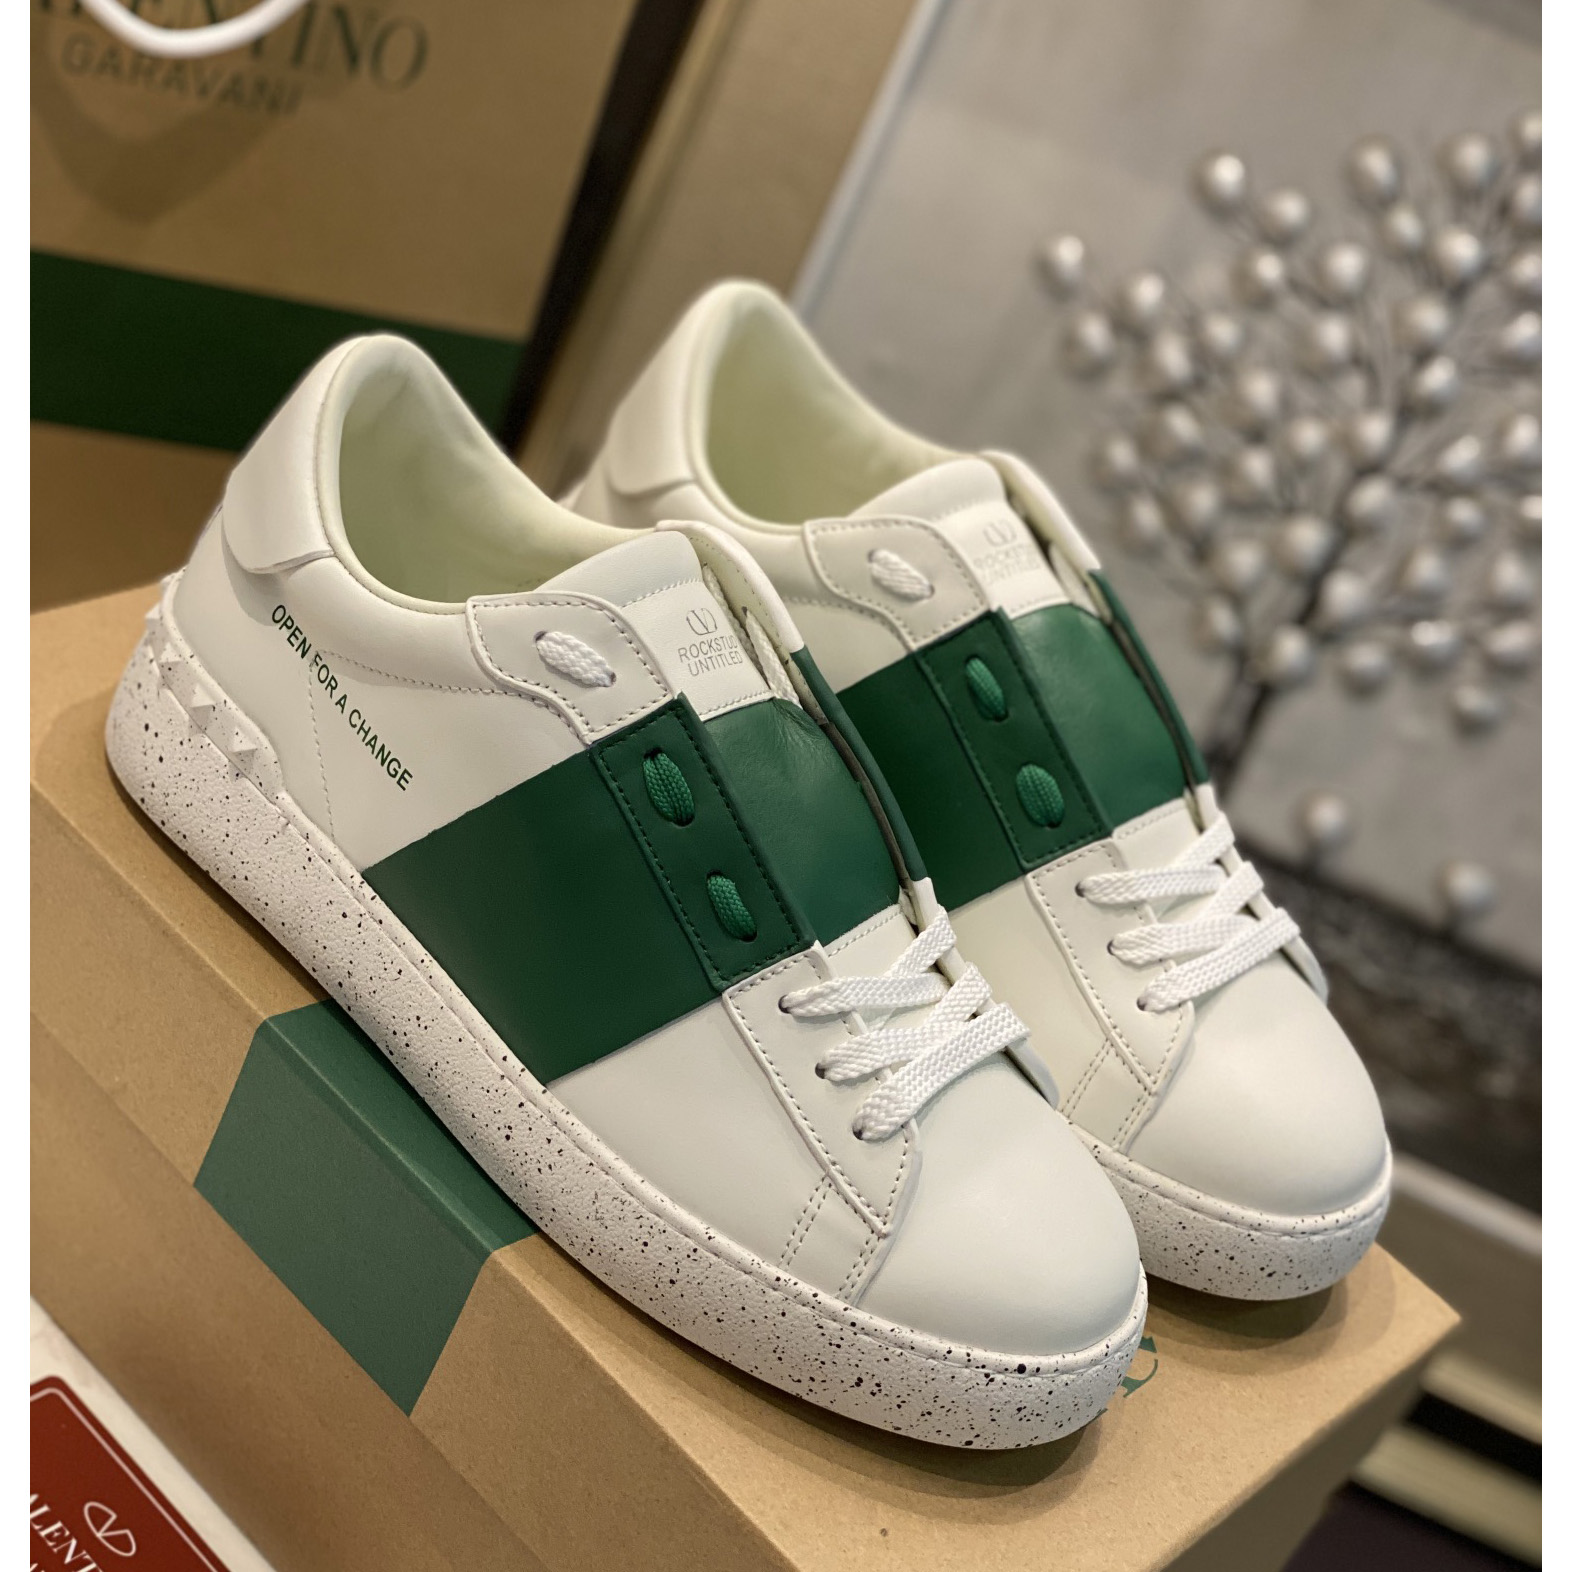 Valenti Open For A Change Sneaker In Bio-Based Material In White/Green - PerfectKickZ